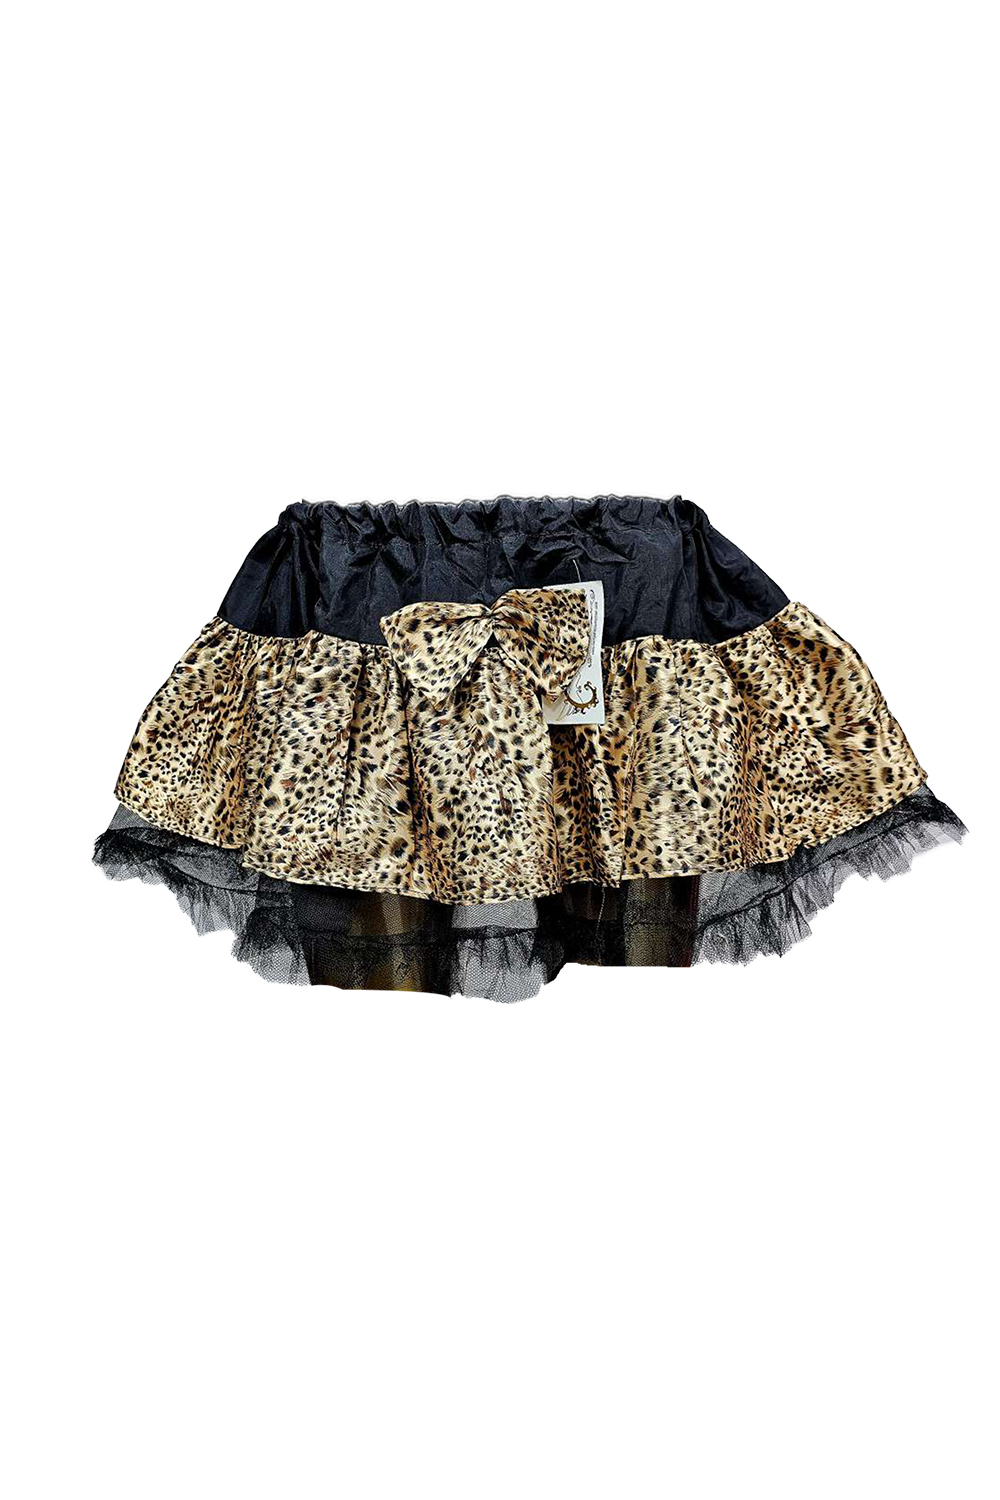 Crazy Chick Adult Leopard Printed Tutu Skirt